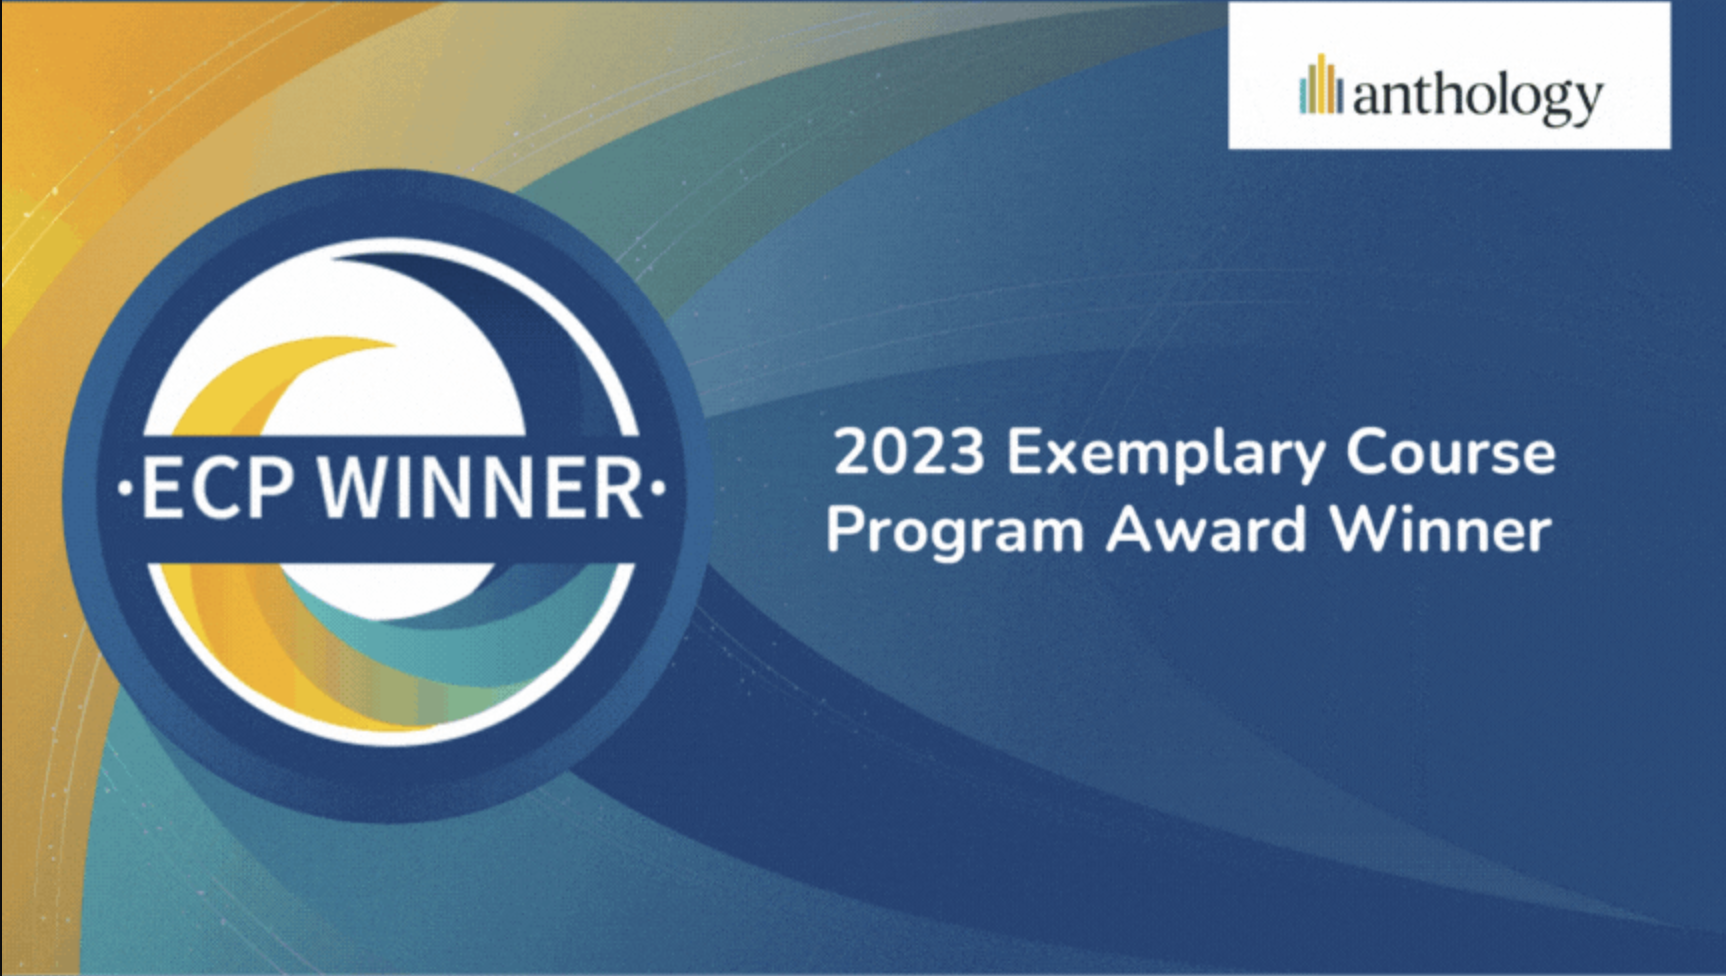 Exemplary Course Program Award Winner logo